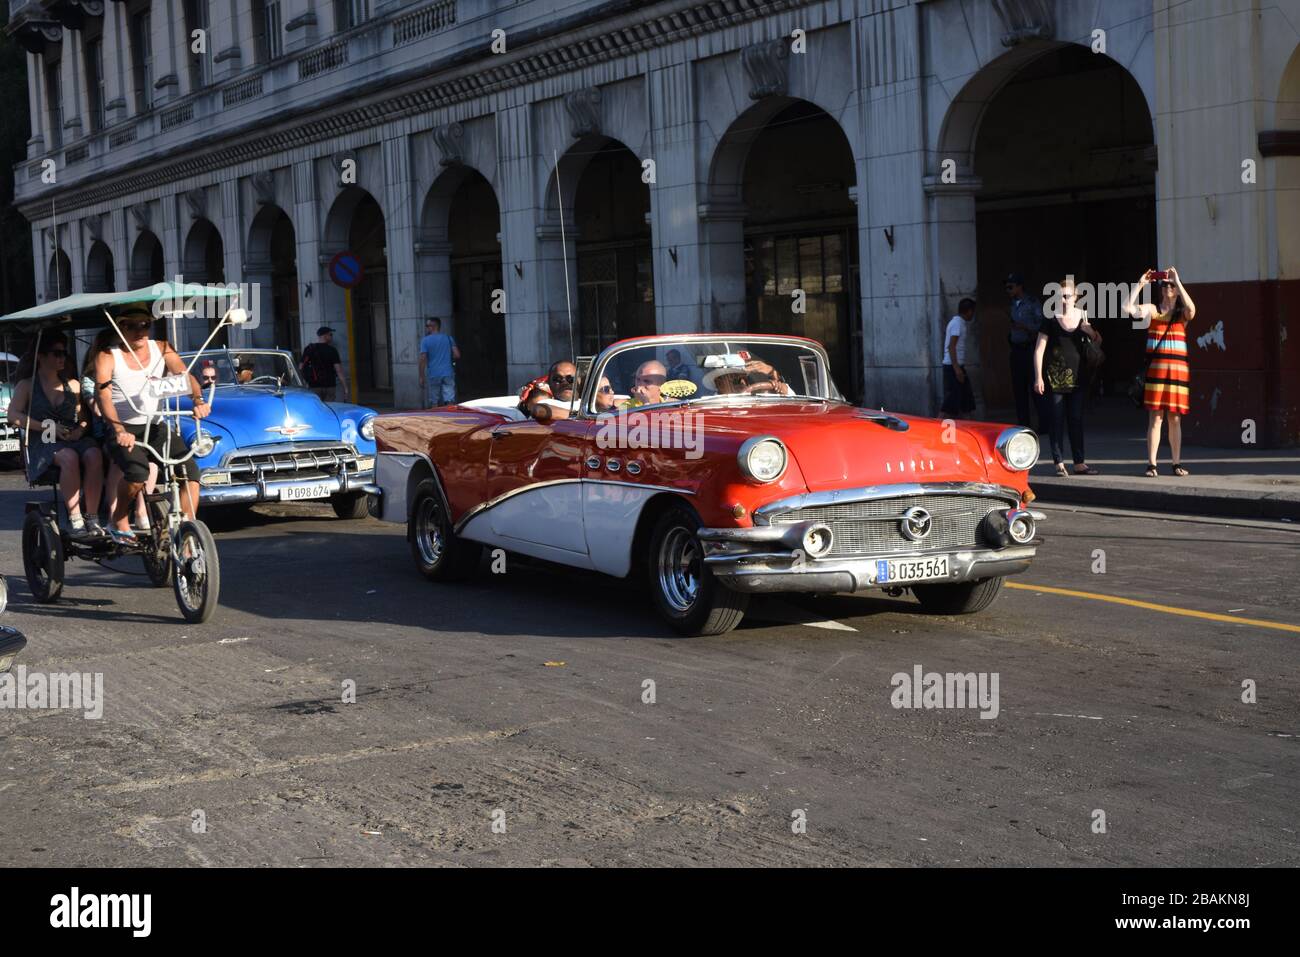 People, tourists, cars, architecture, 2014, Cuba Stock Photo